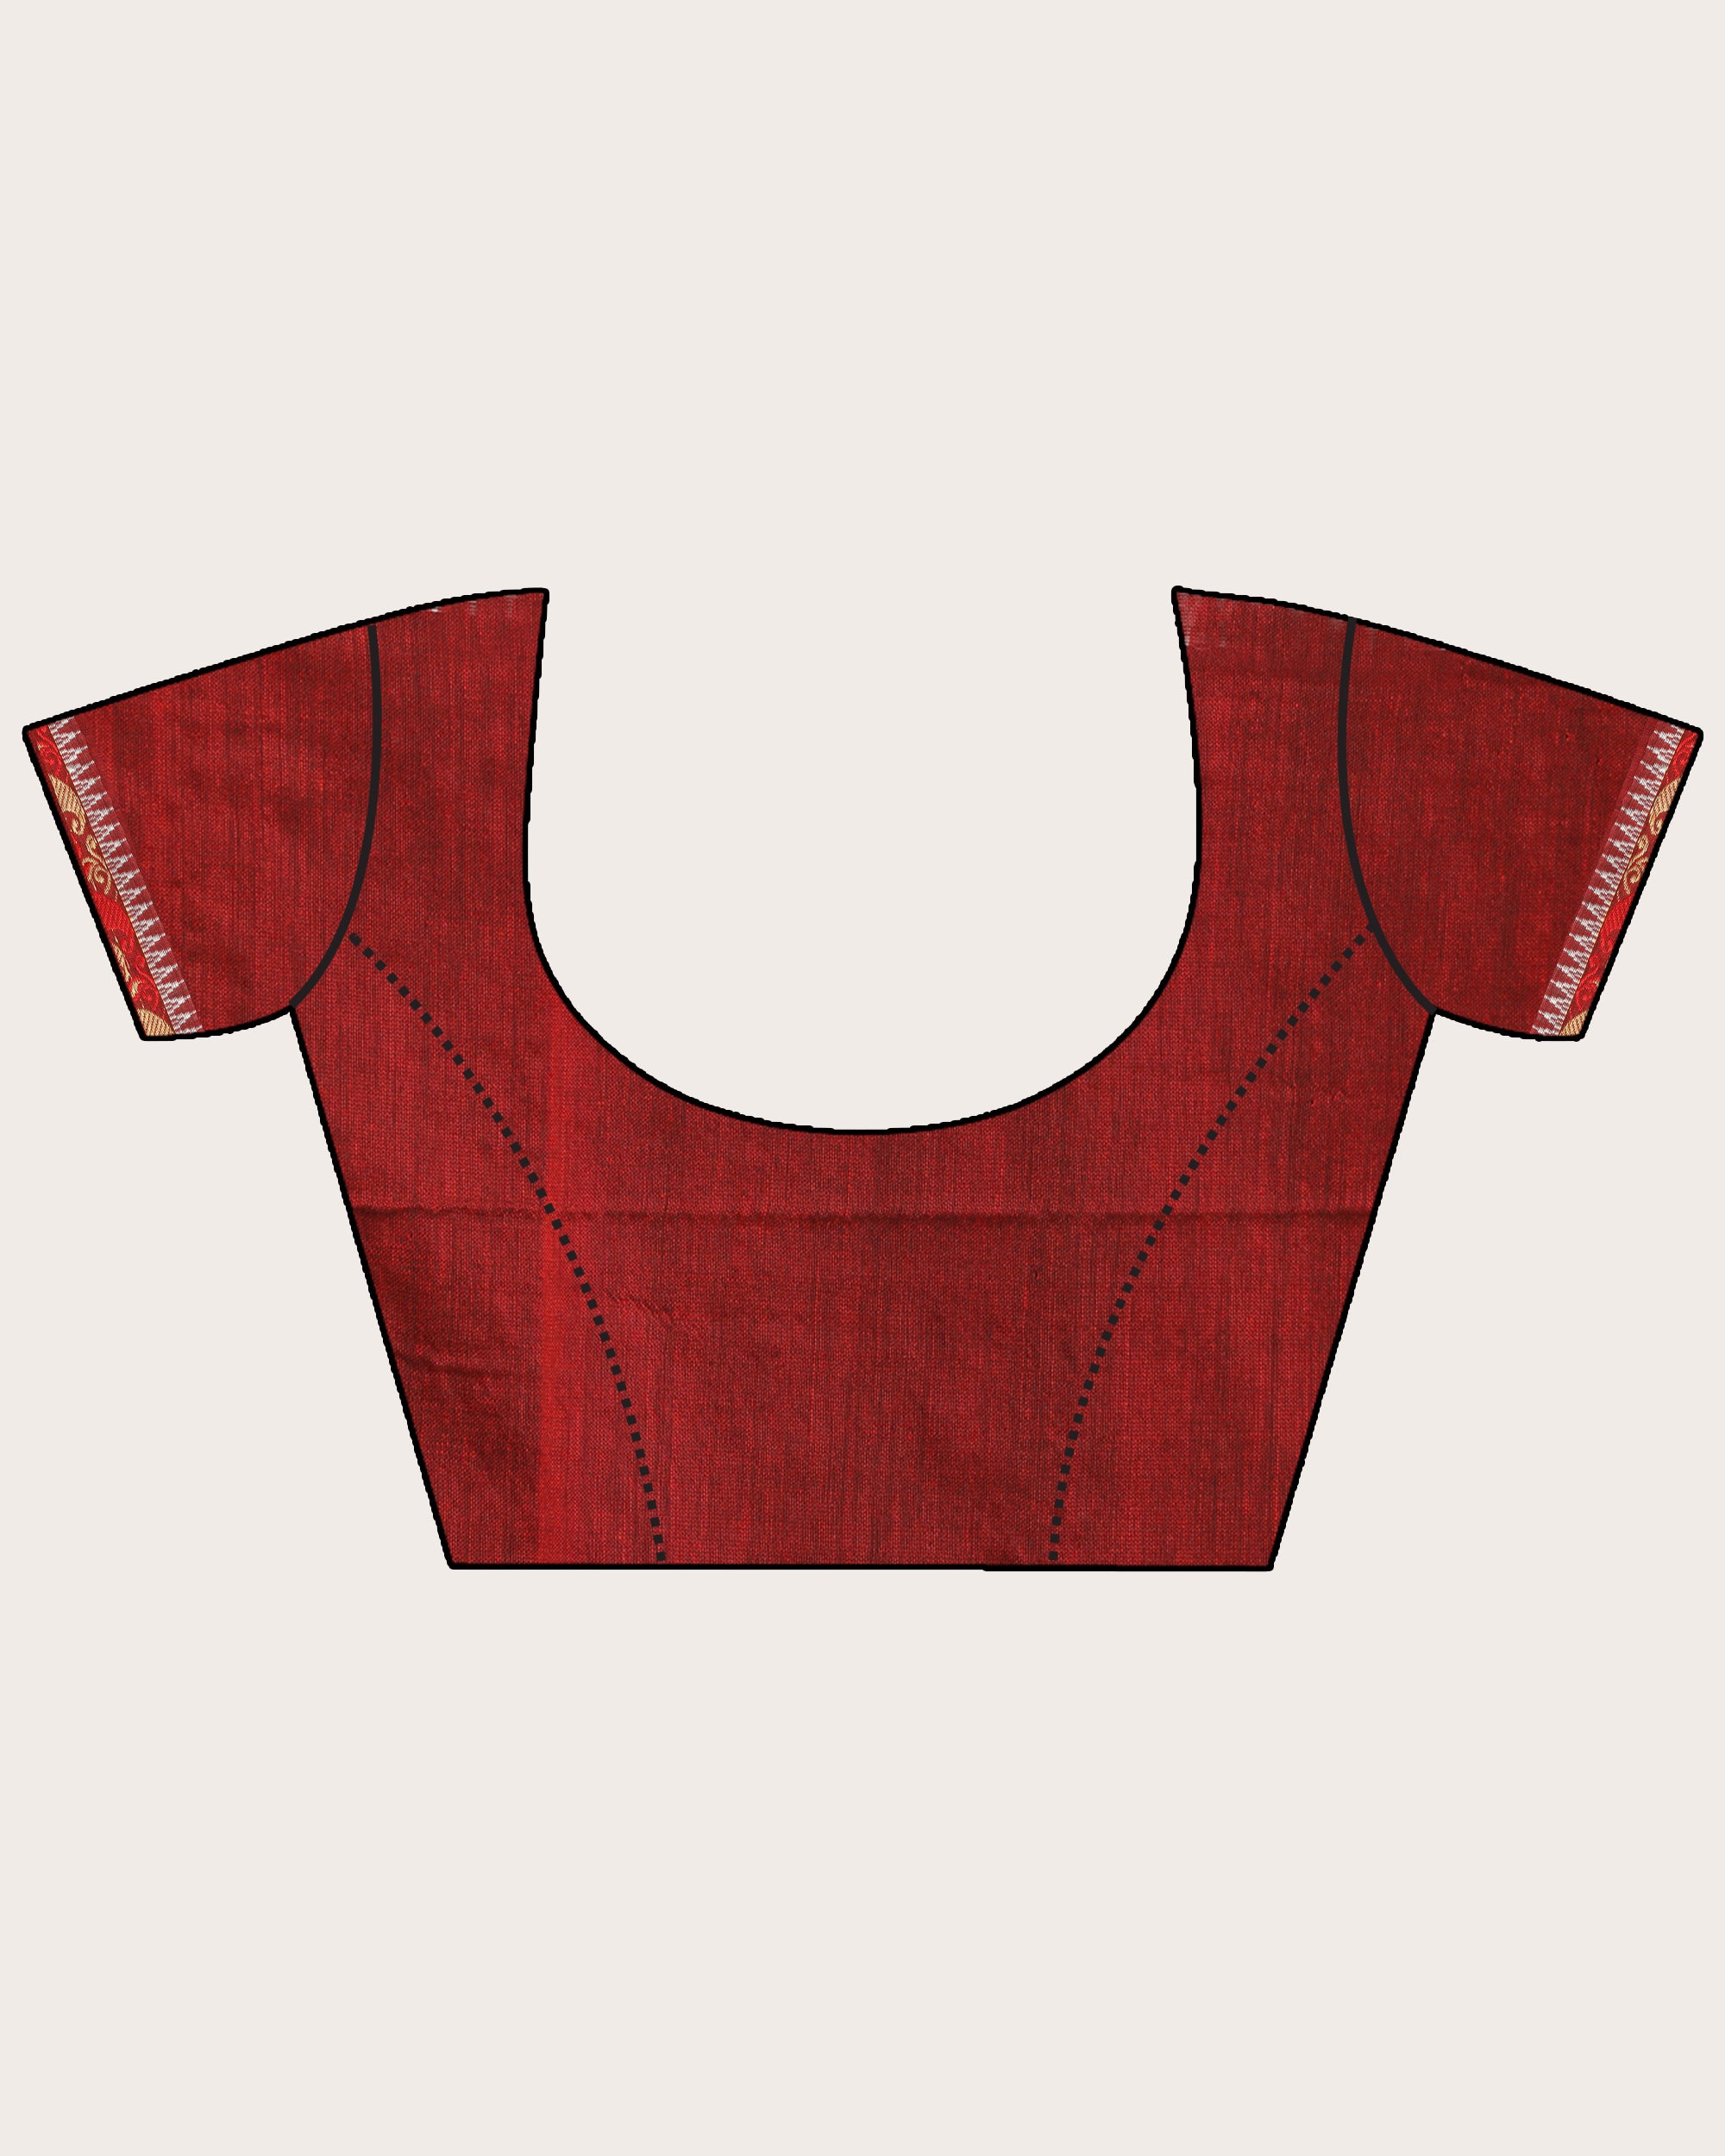 Women's Black Handloom Cotton Tangail Saree - Angoshobha